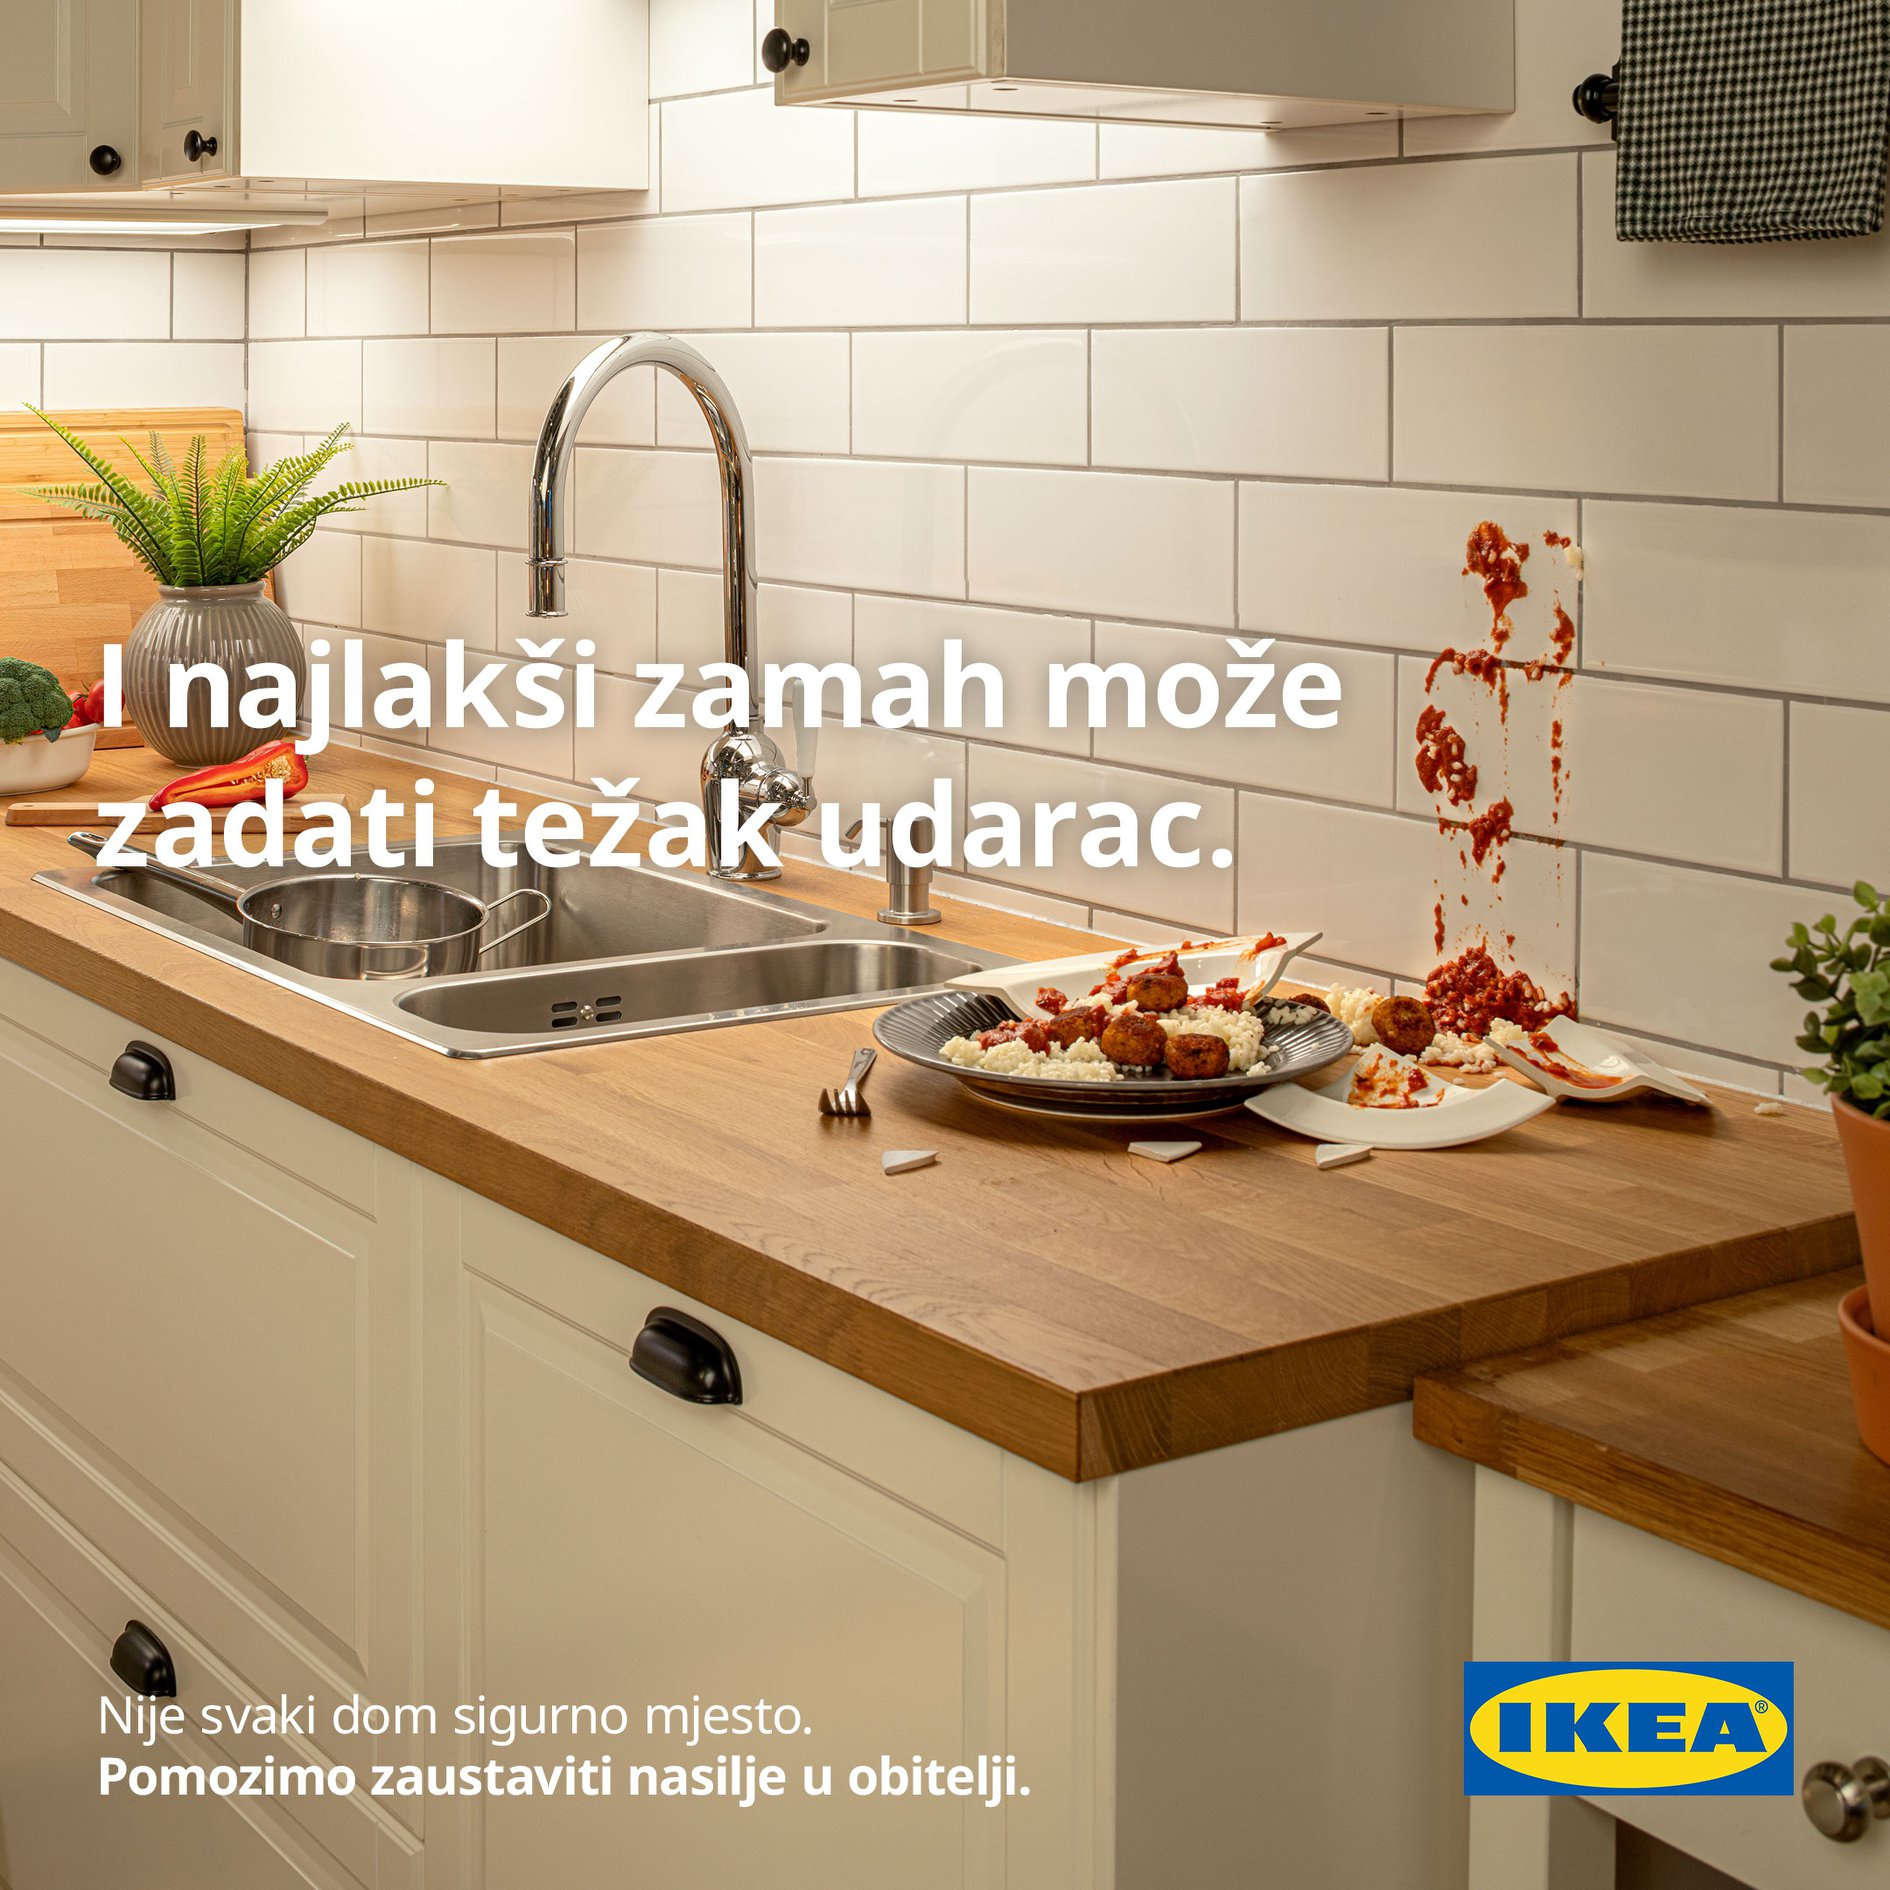 Reklama Ikee